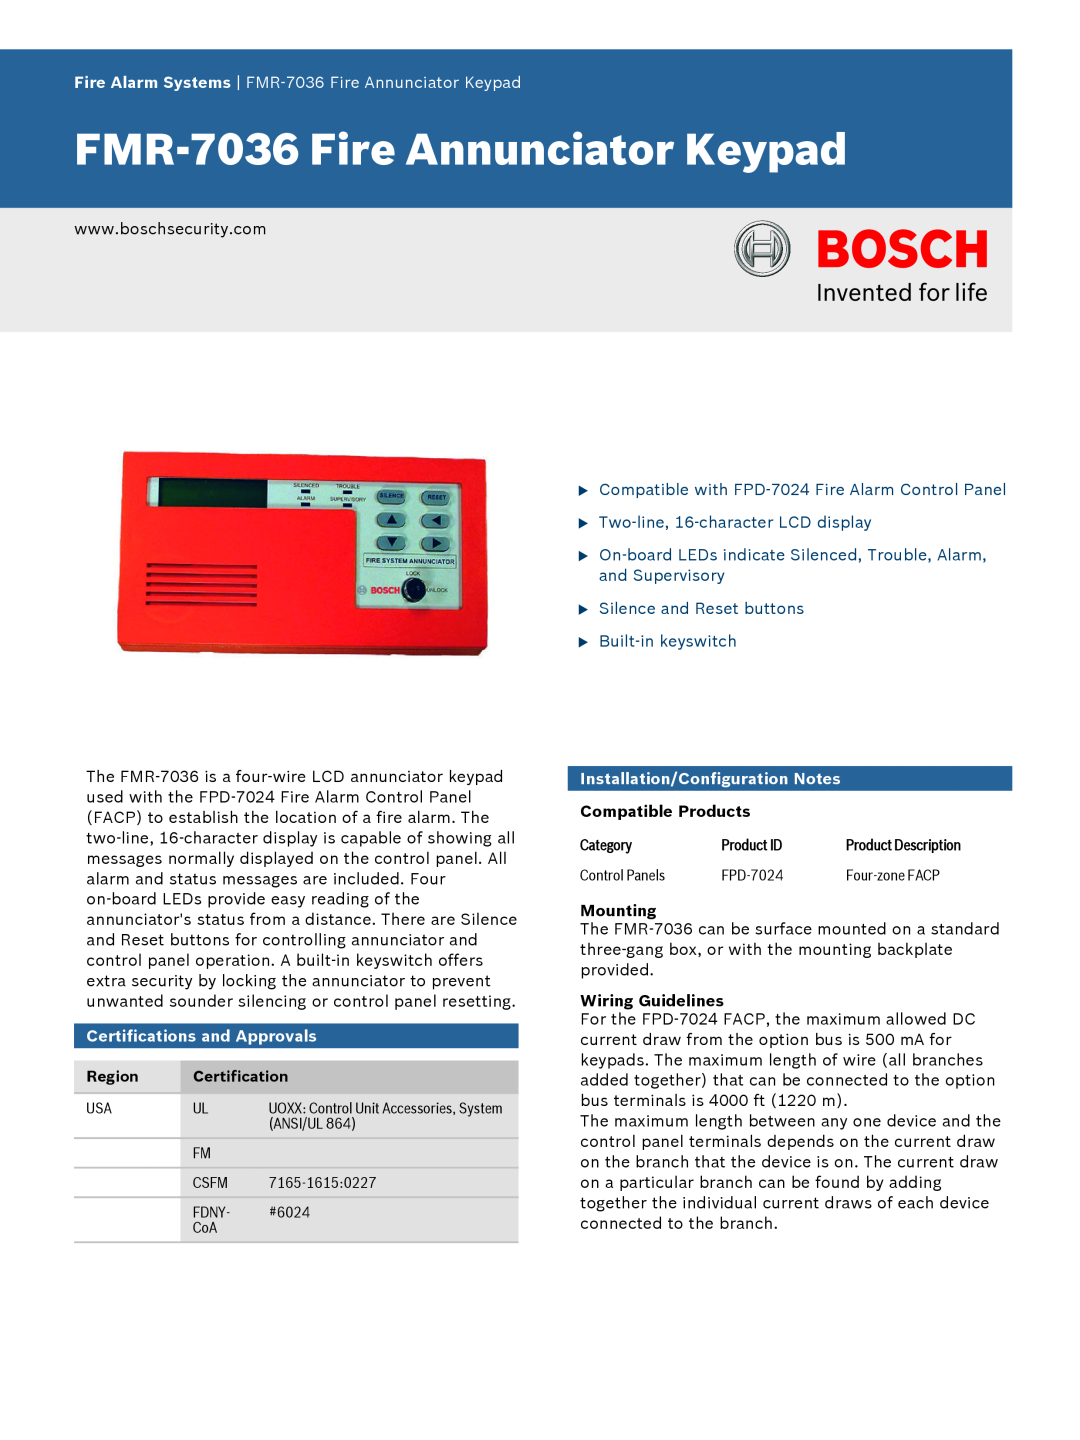 Bosch Appliances FMR-7036 installation instructions Fire Annunciator Keypad 